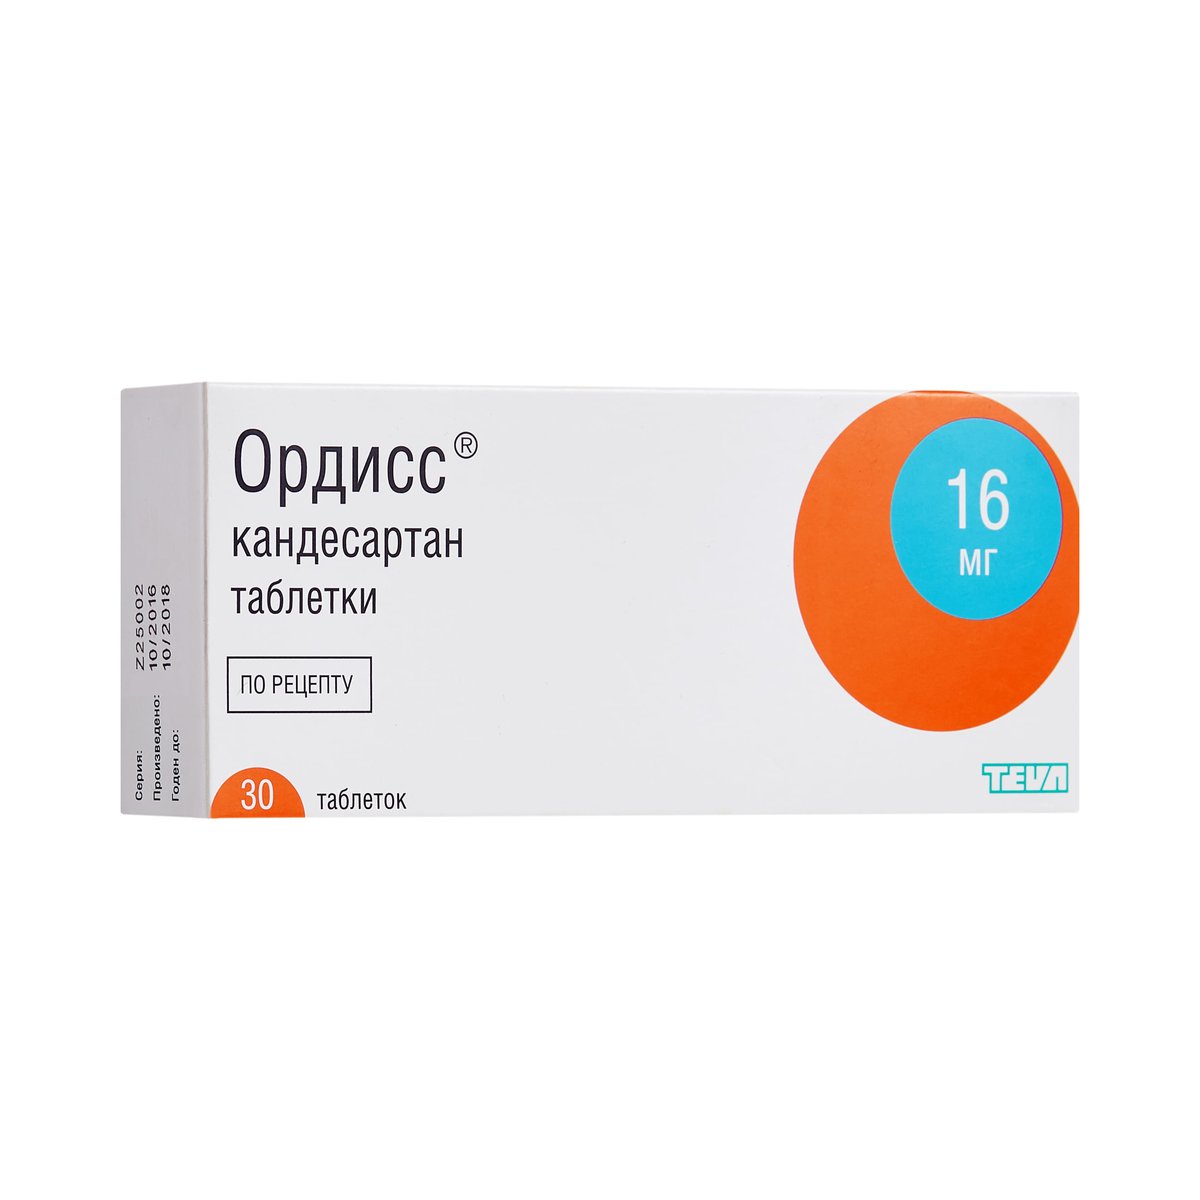 Ордисс (таблетки, 30 шт, 16 мг) - цена,  онлайн  .